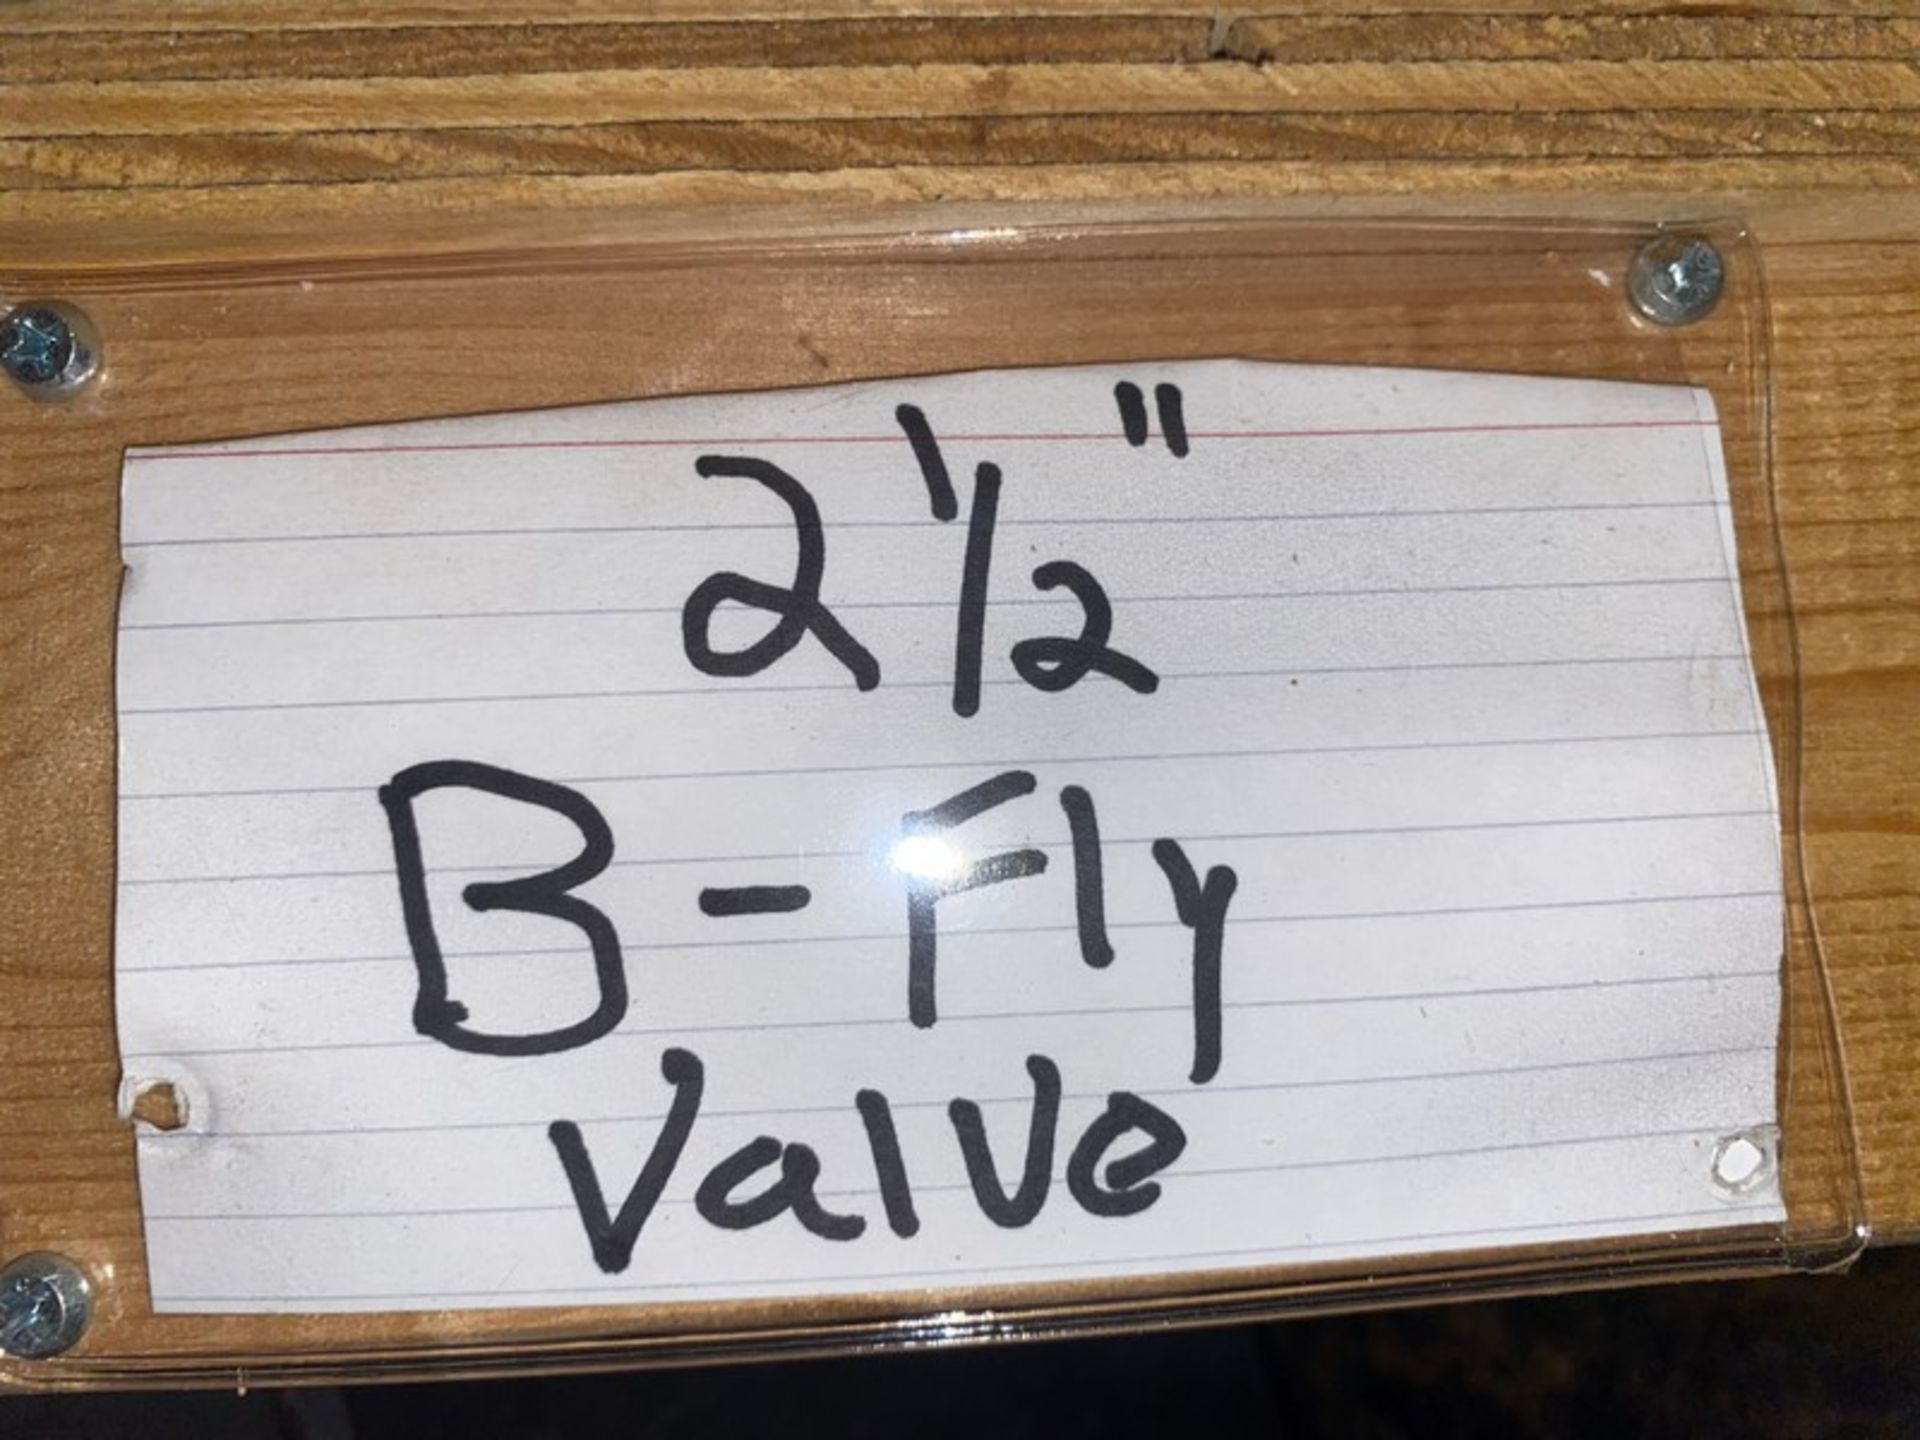 2 1/2 B-Fly Valve3” B-Fly Valve4” B-Fly Valve5” B-Fly Valve6” Butterfly Valve2” Groved Valve3” - Image 6 of 6